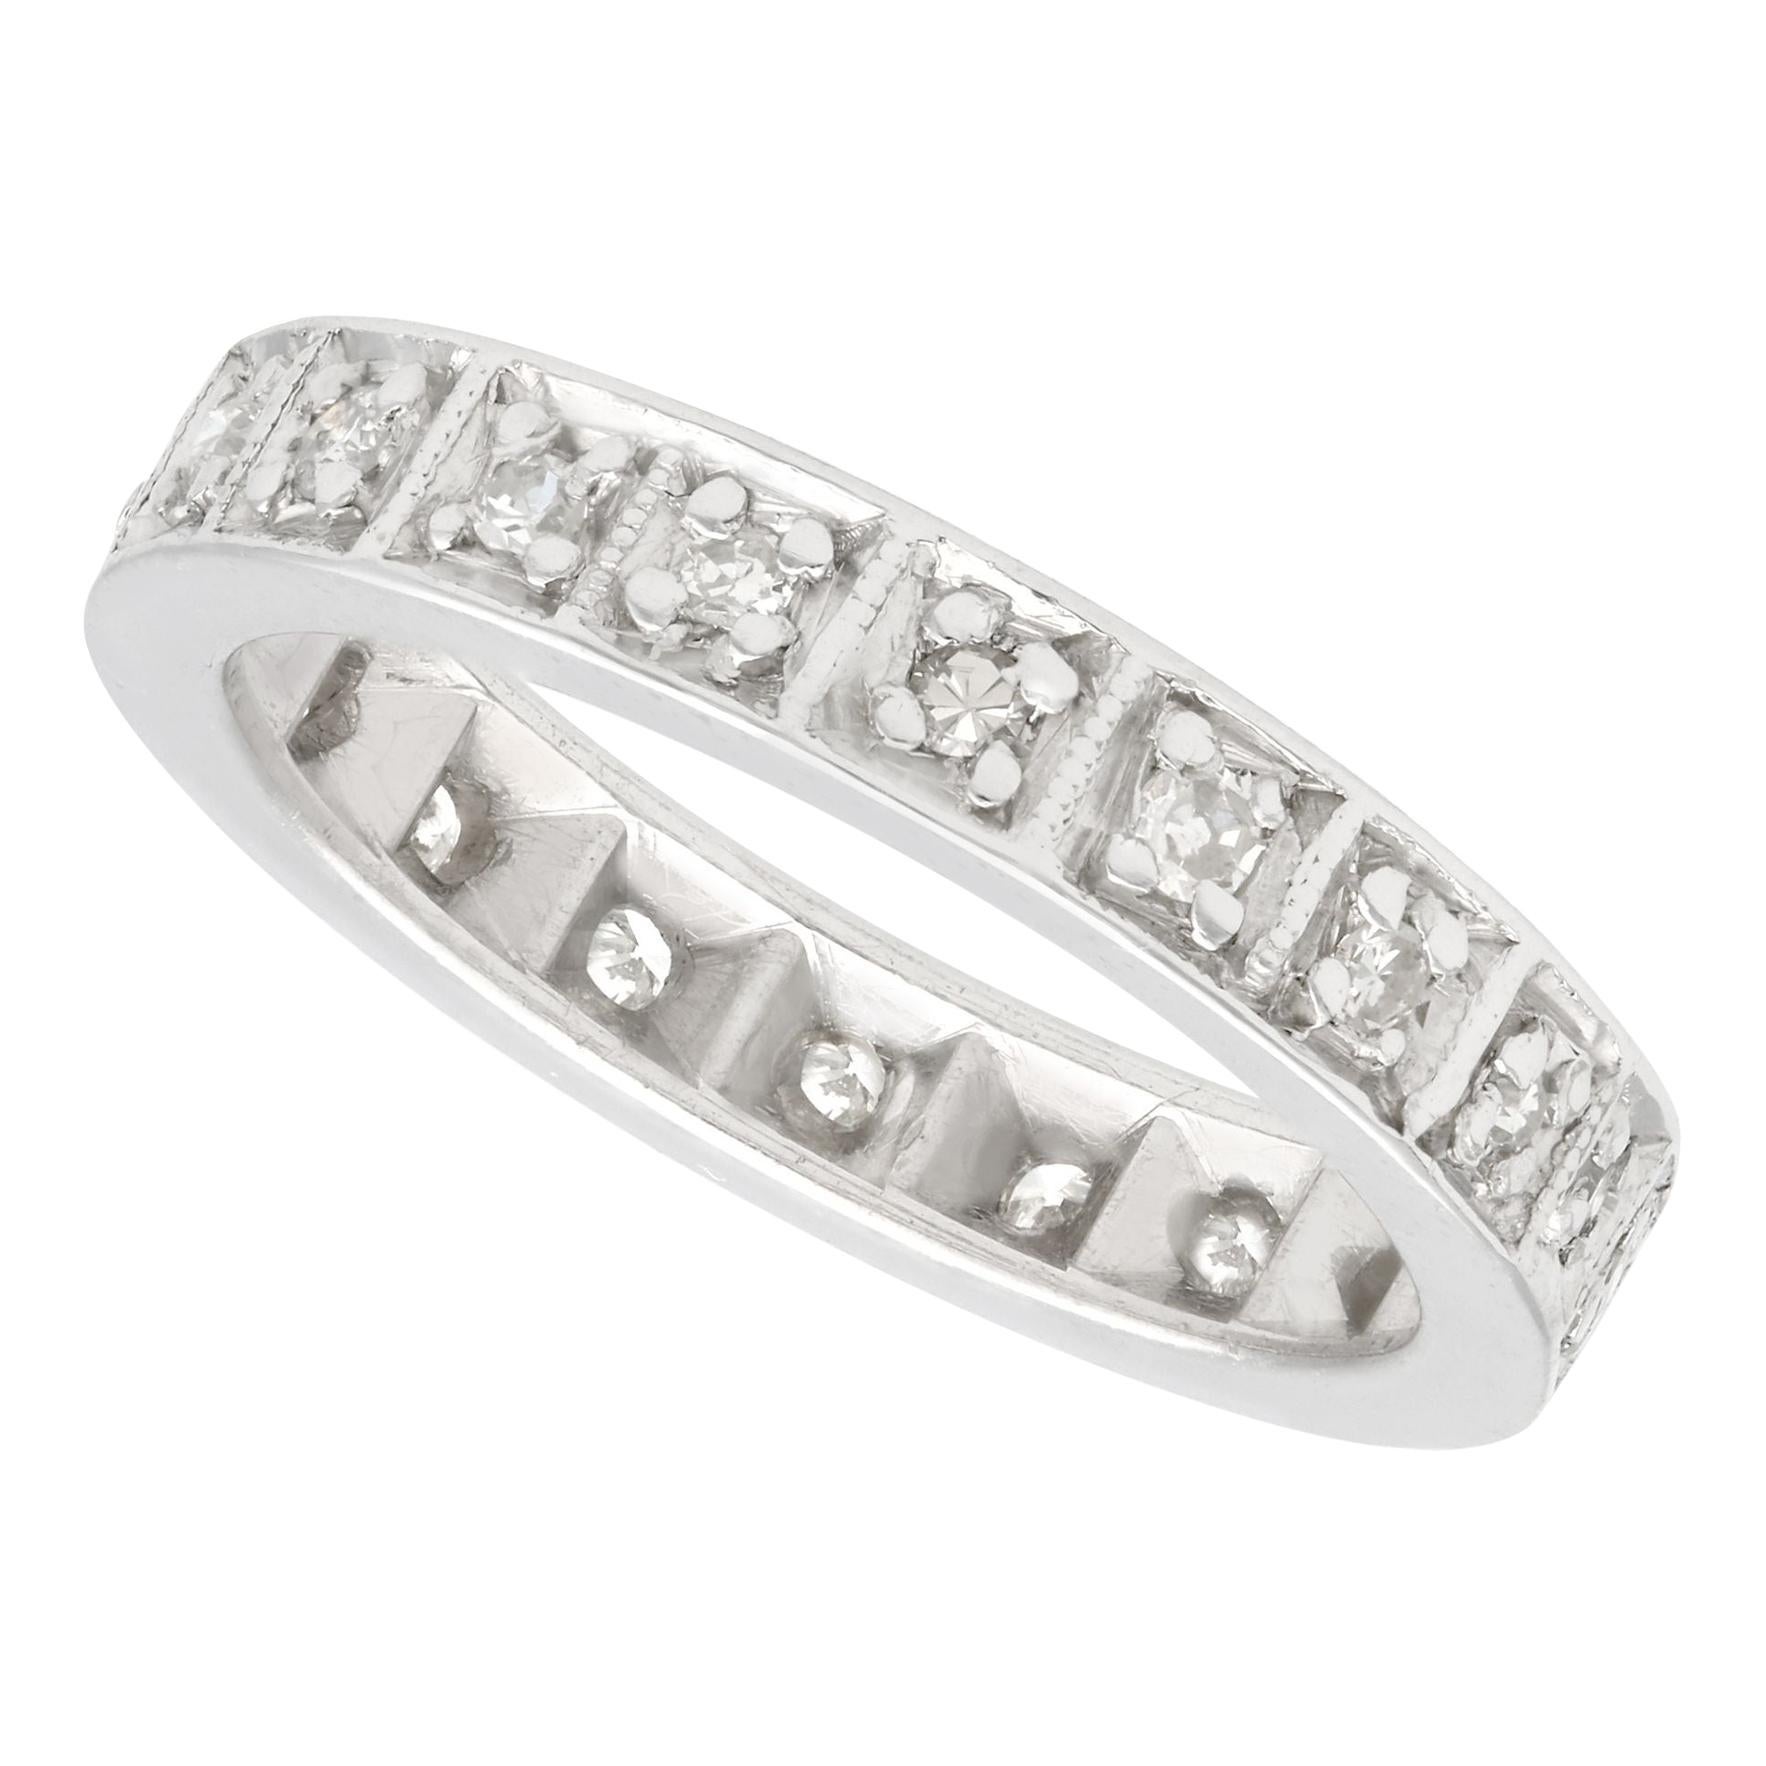 1940s Diamond and White Gold Full Eternity Ring